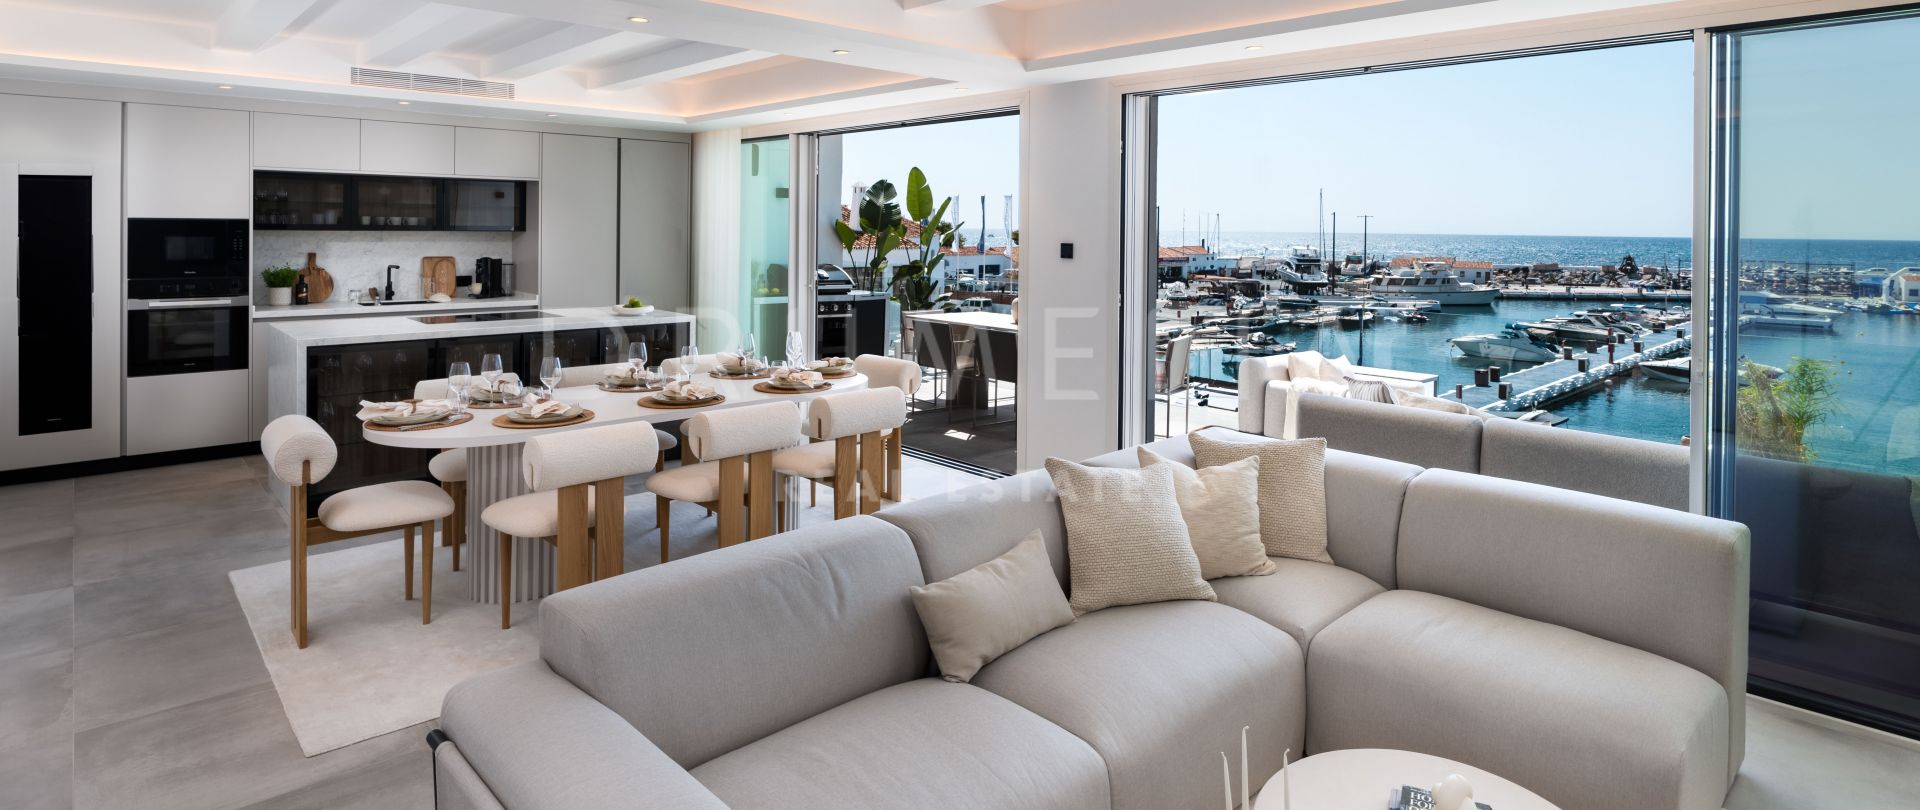 Stunning Luxury Apartment Frontline Puerto Banus